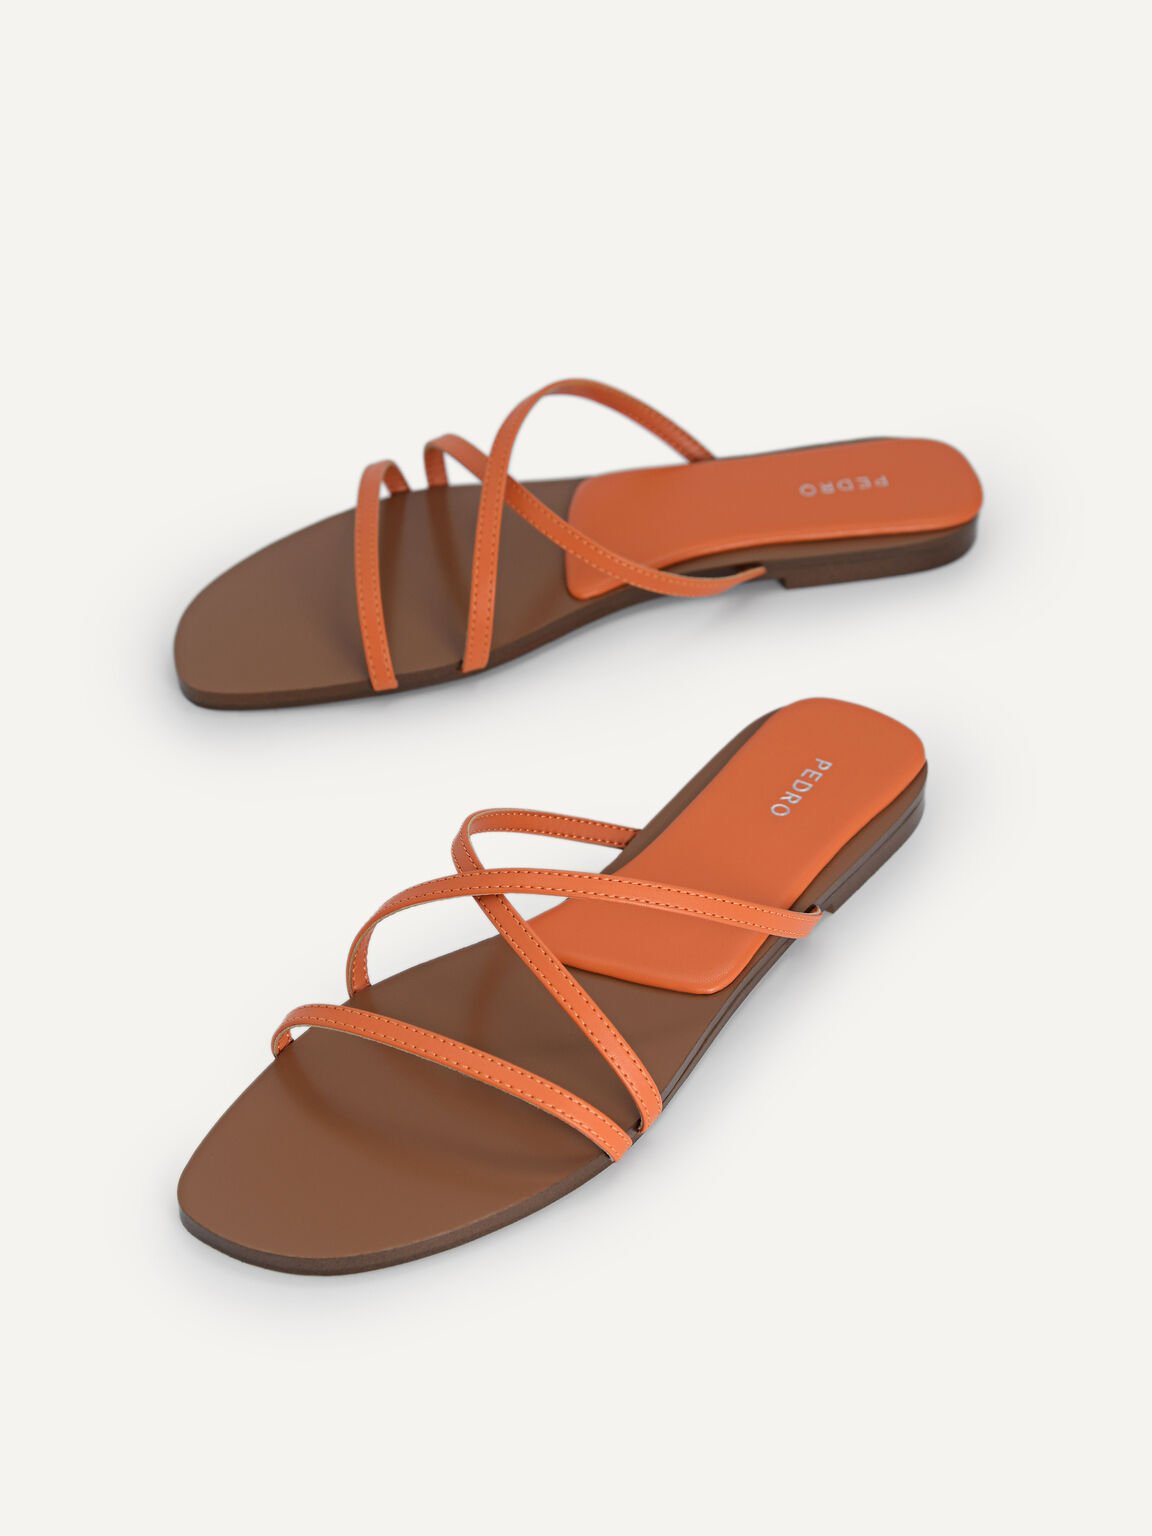 Criss-Cross Strappy Sandals, Orange, hi-res